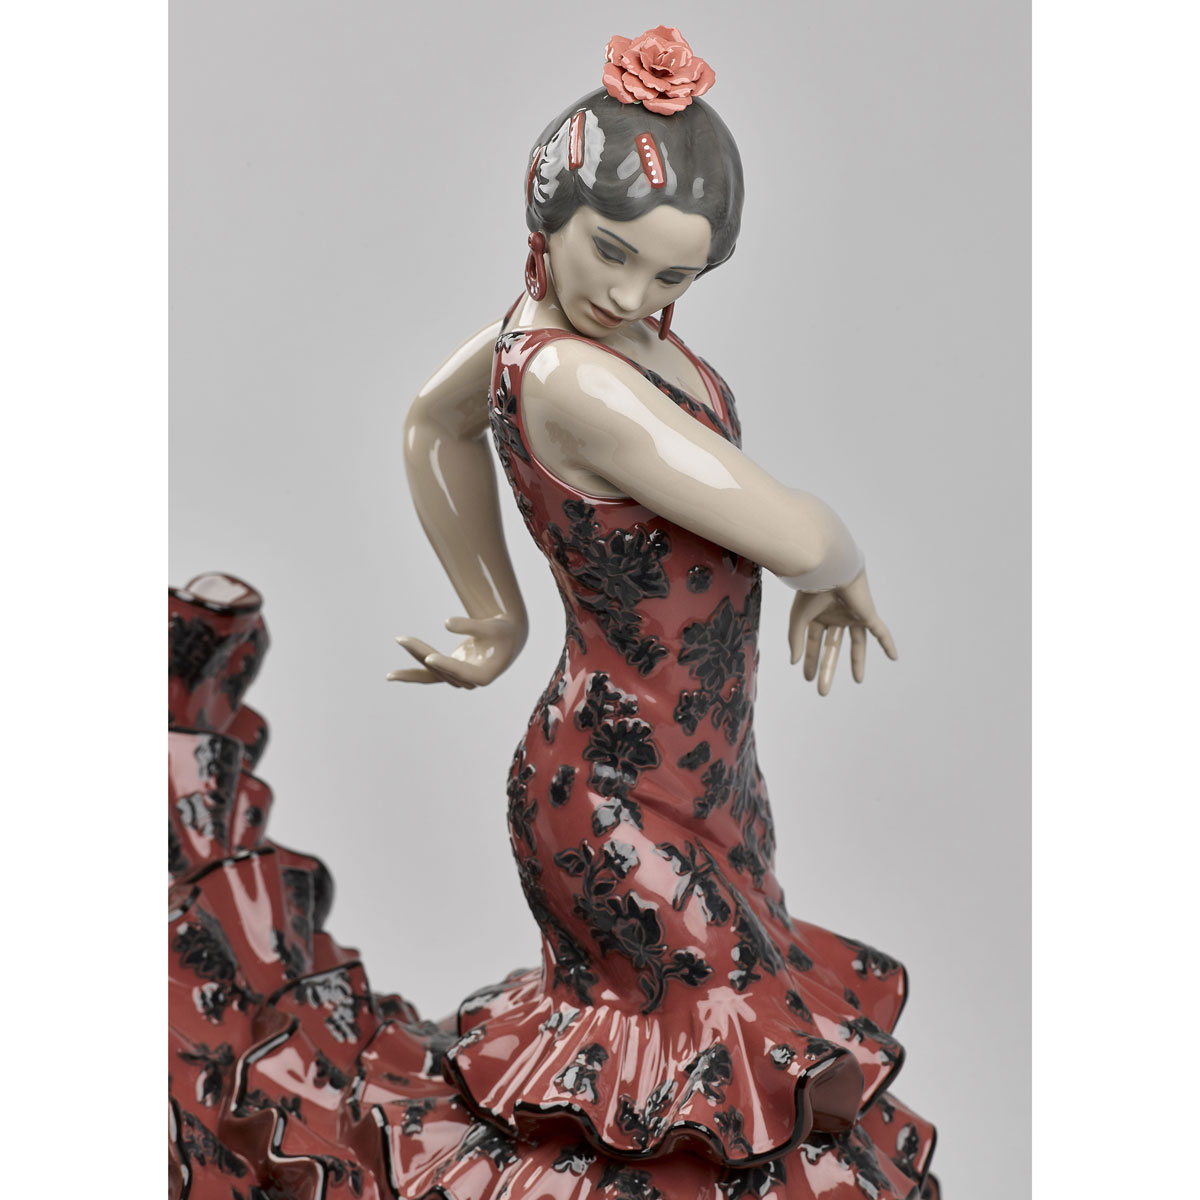 Lladro Classic Sculpture, Flamenco Flair Woman Sculpture. Red